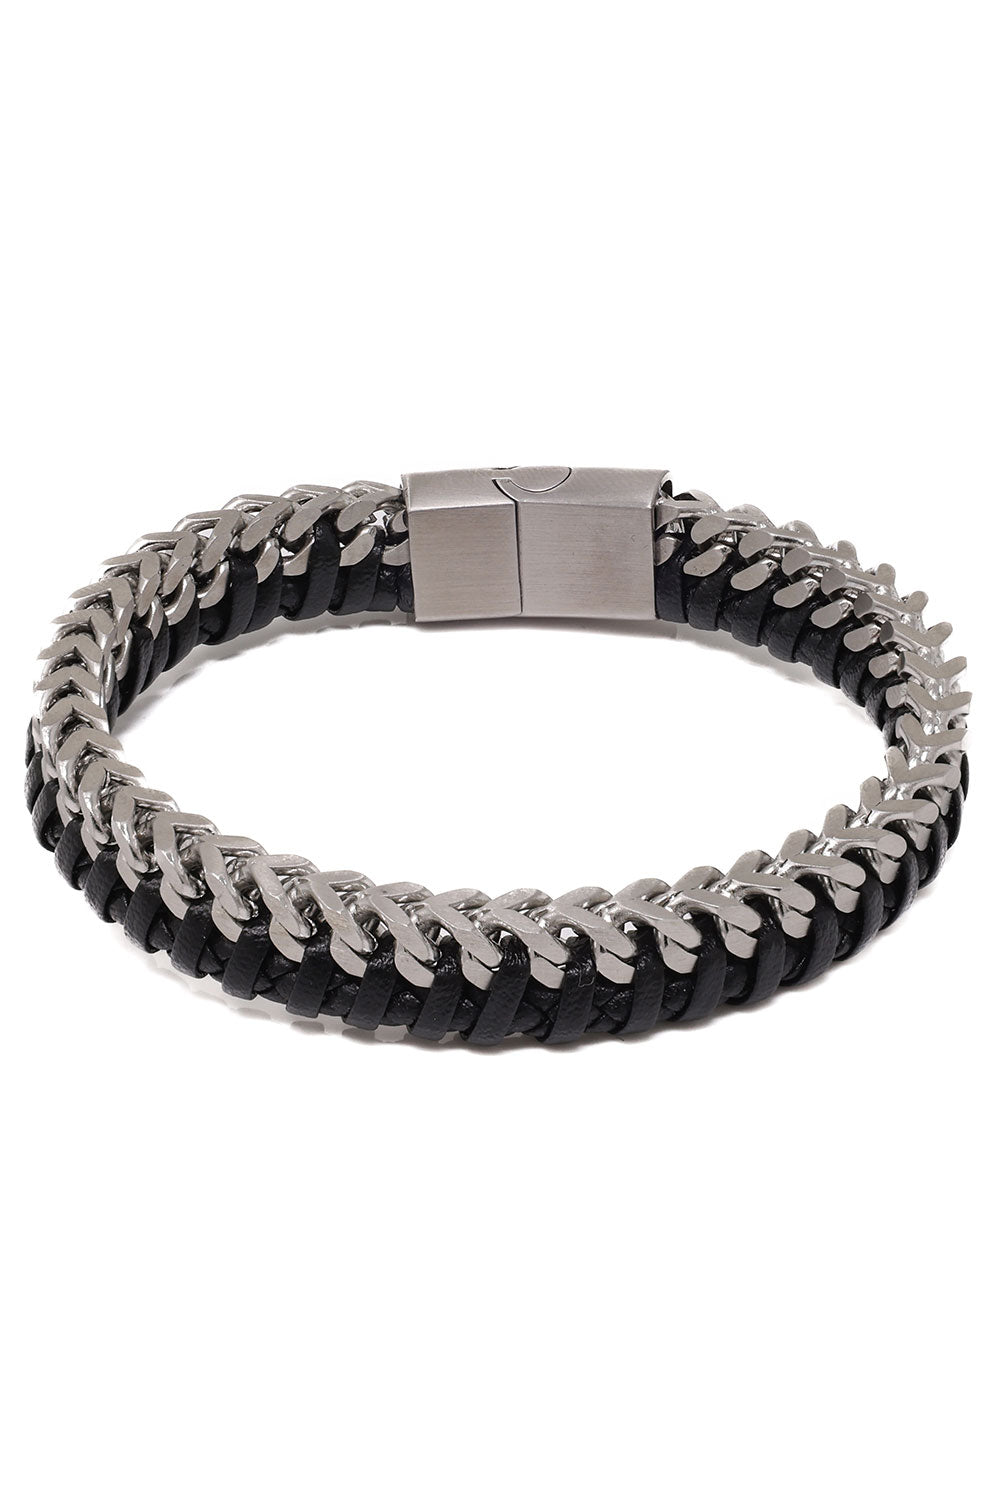 Barabas Unisex Braided Leather Metal Bangle Bracelets 4BMS01 Black Silver